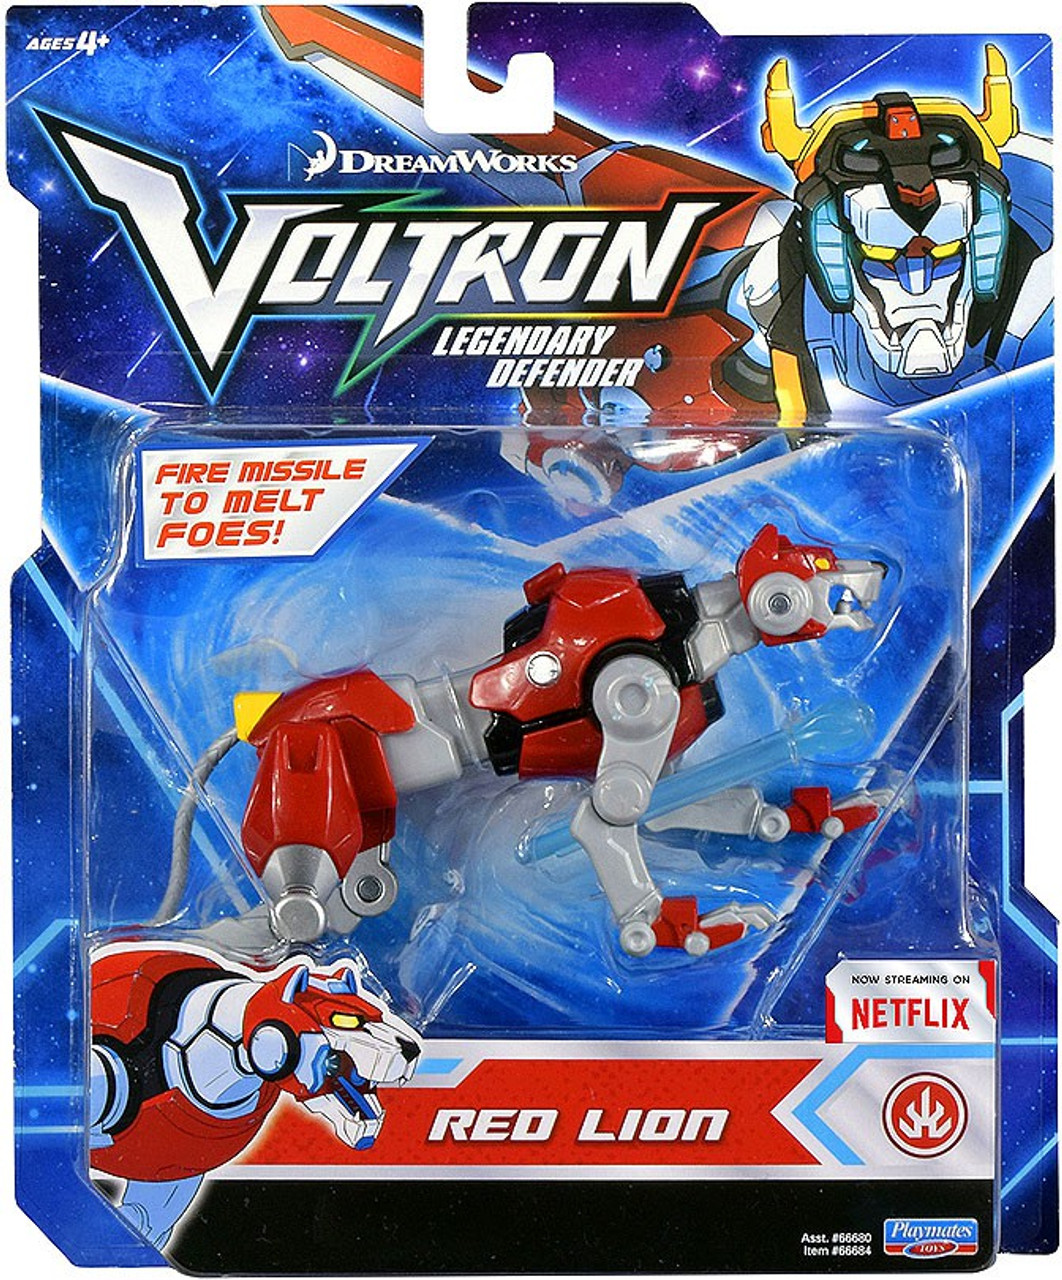 Voltron Legendary Defender Red Lion 5 Basic Action Figure Playmates Toywiz - roblox voltron red lion